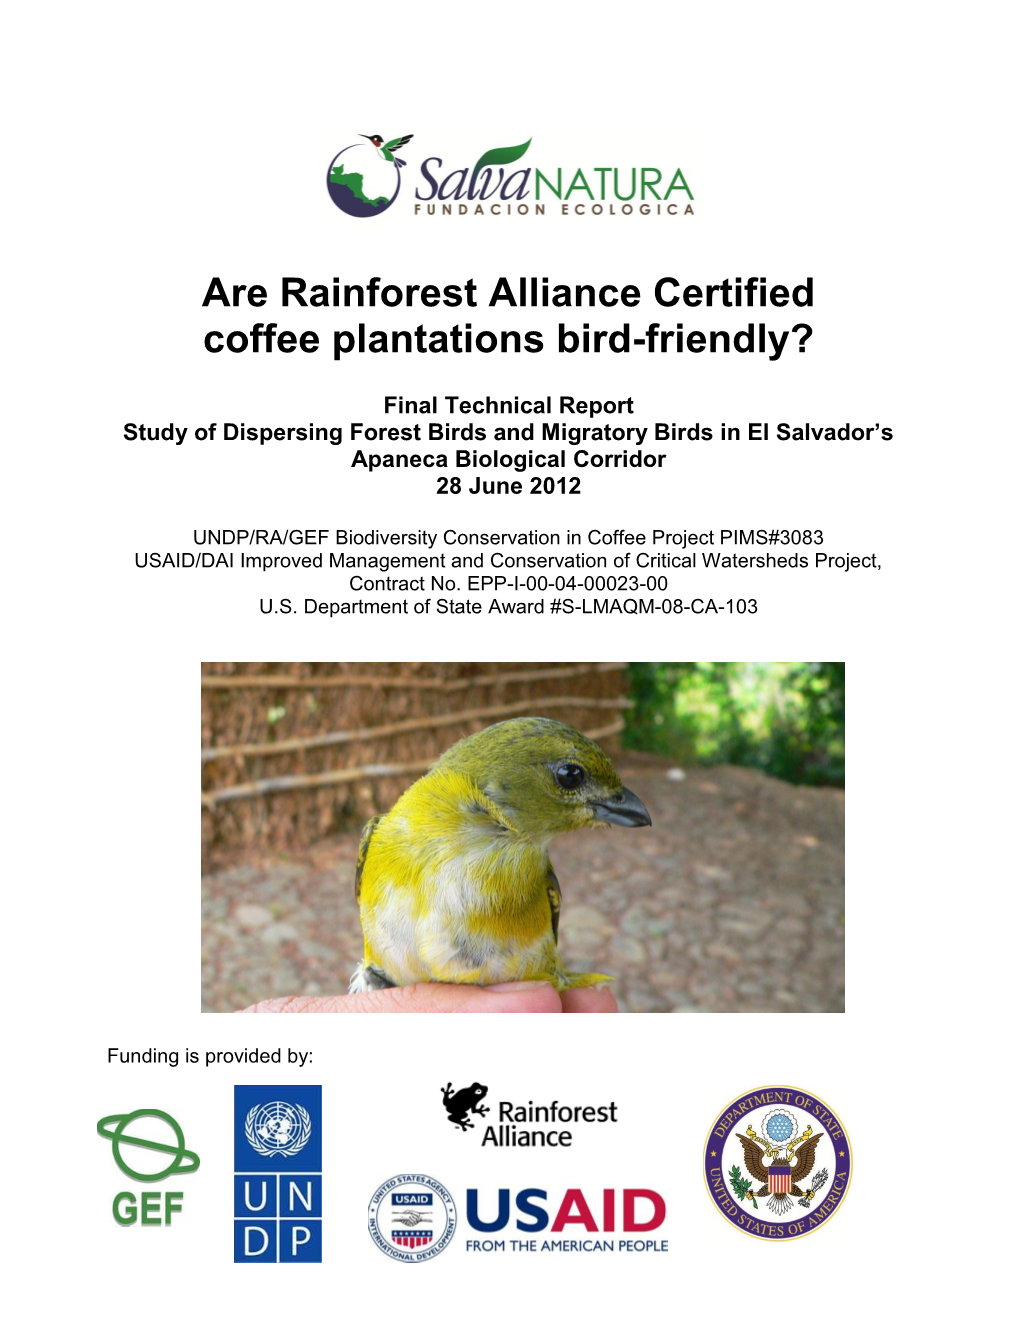 Are Rainforest Alliance Certified Coffee Plantations Bird-Friendly?